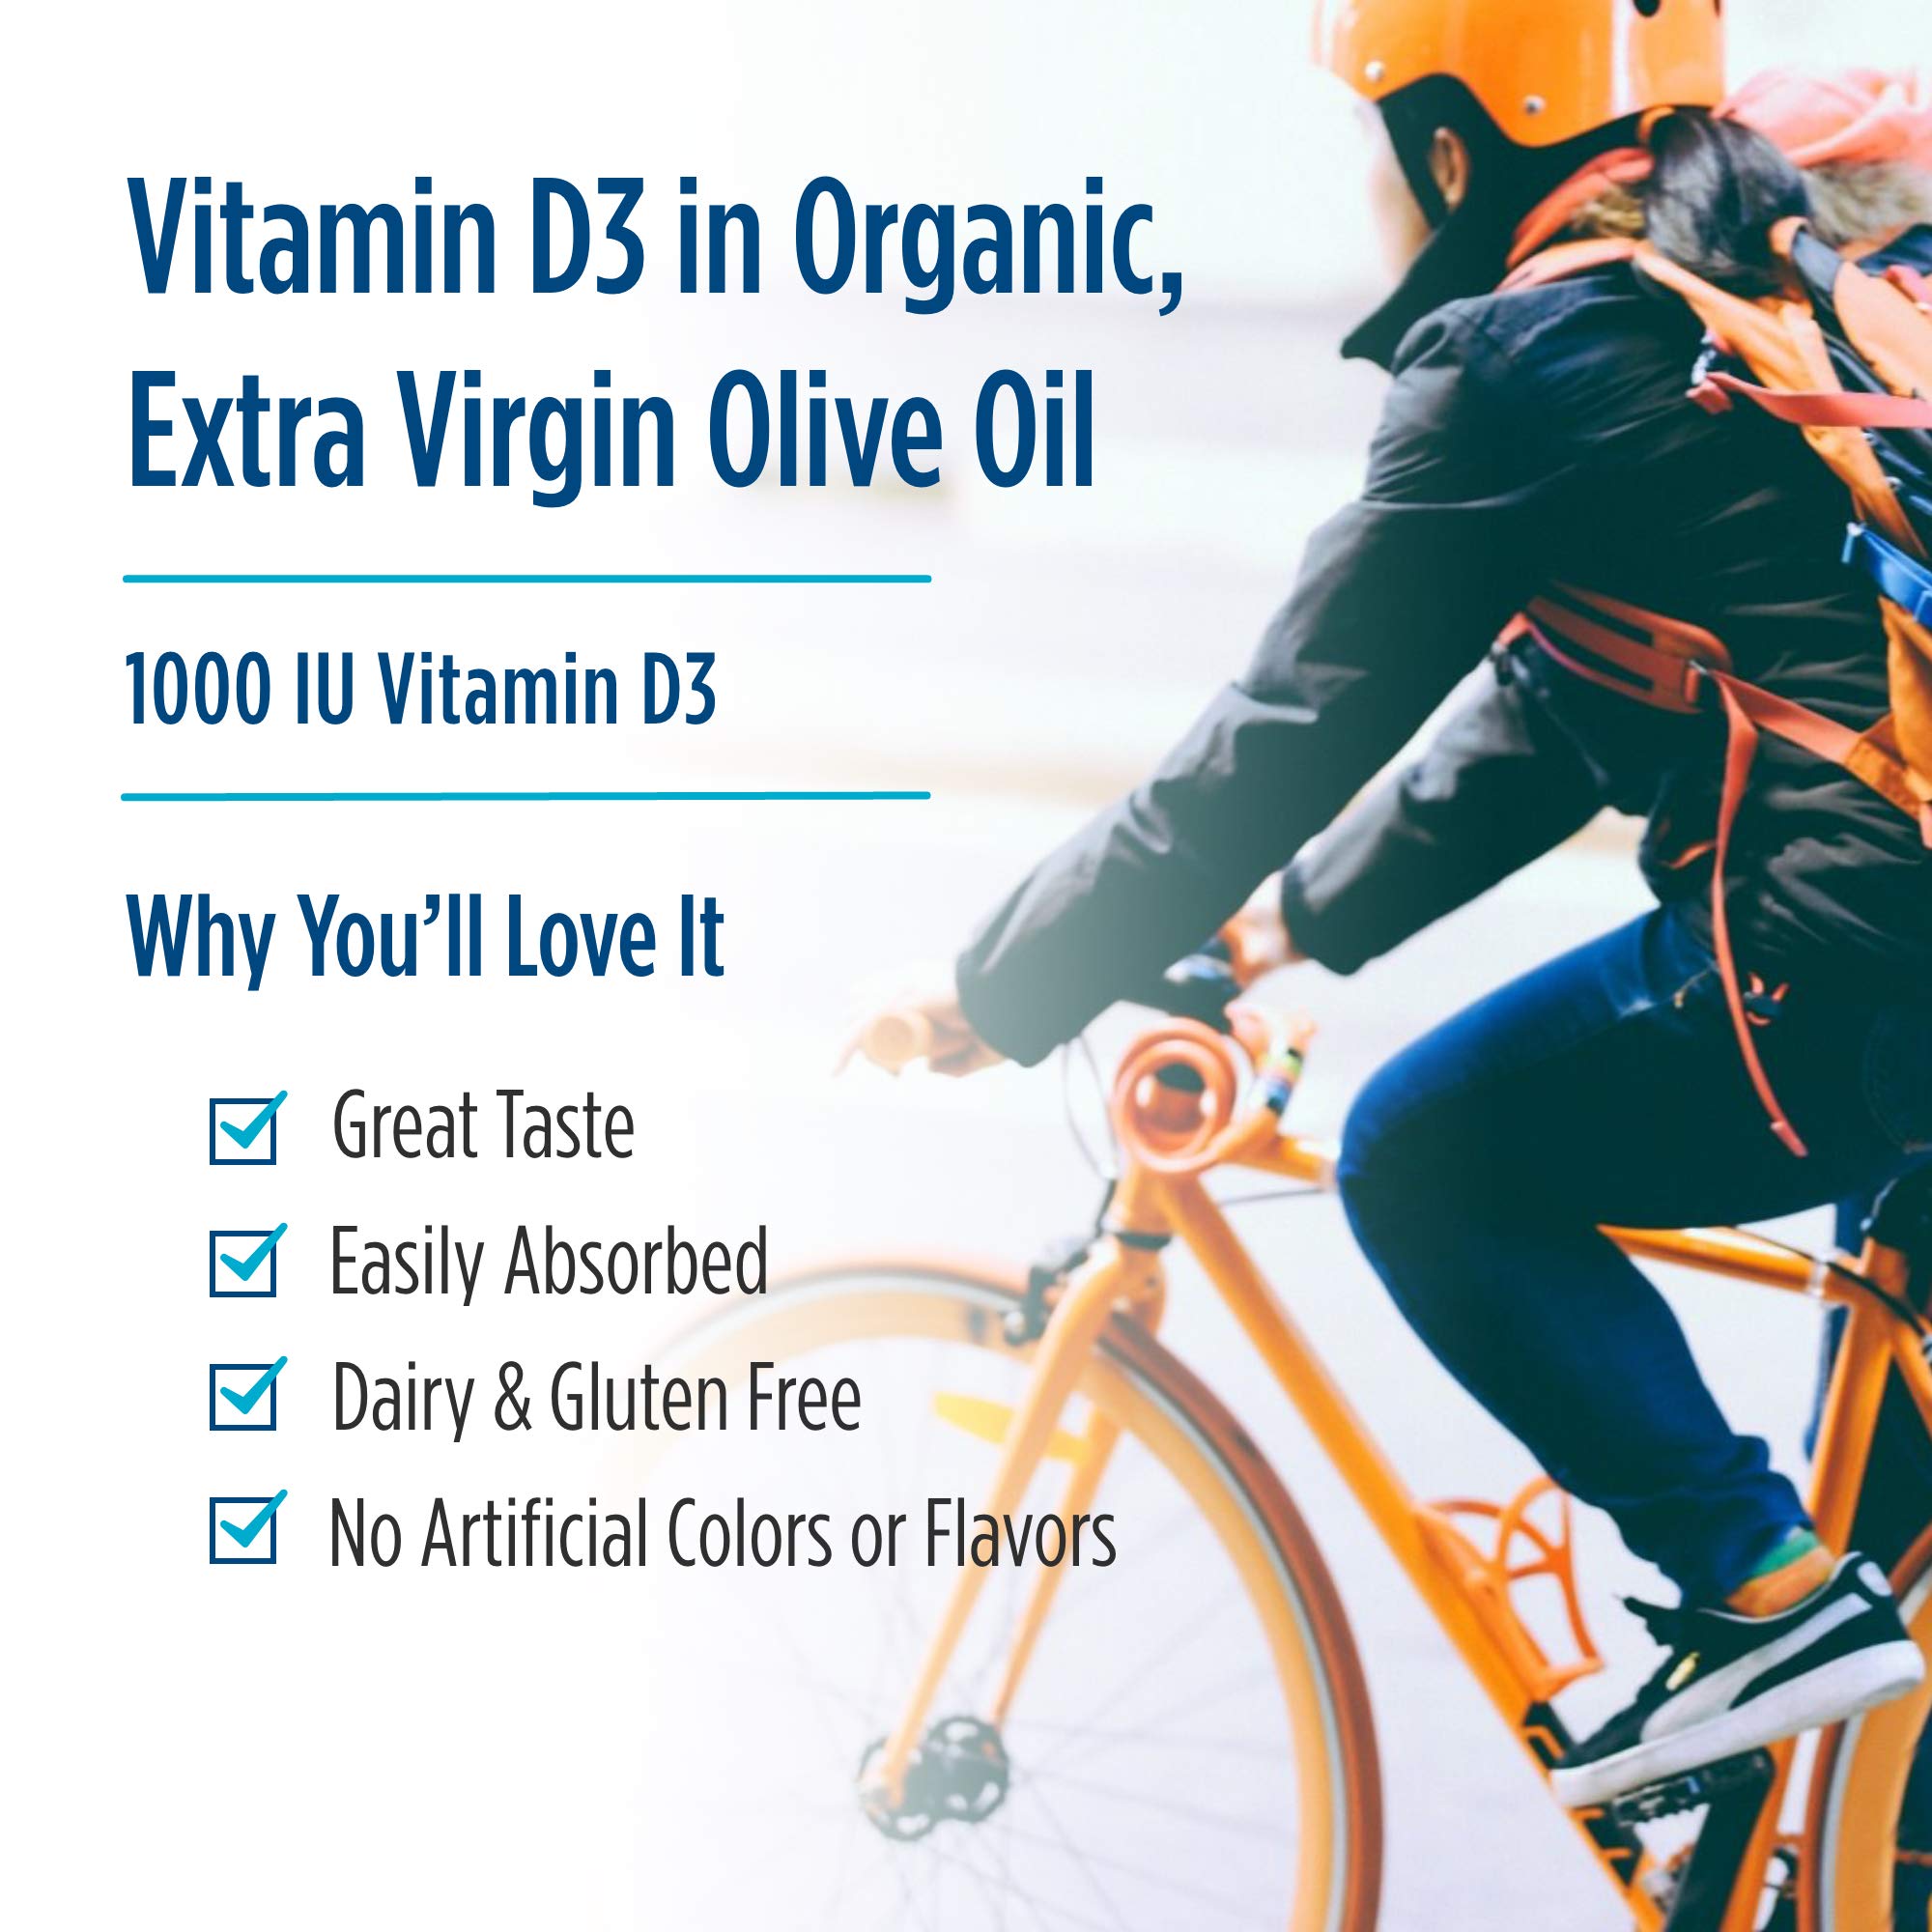 Nordic Naturals Vitamin D3 1000, Orange - 1000 IU Vitamin D3-120 Mini Soft Gels - Supports Healthy Bones, Mood & Immune System Function - Non-GMO - 120 Servings